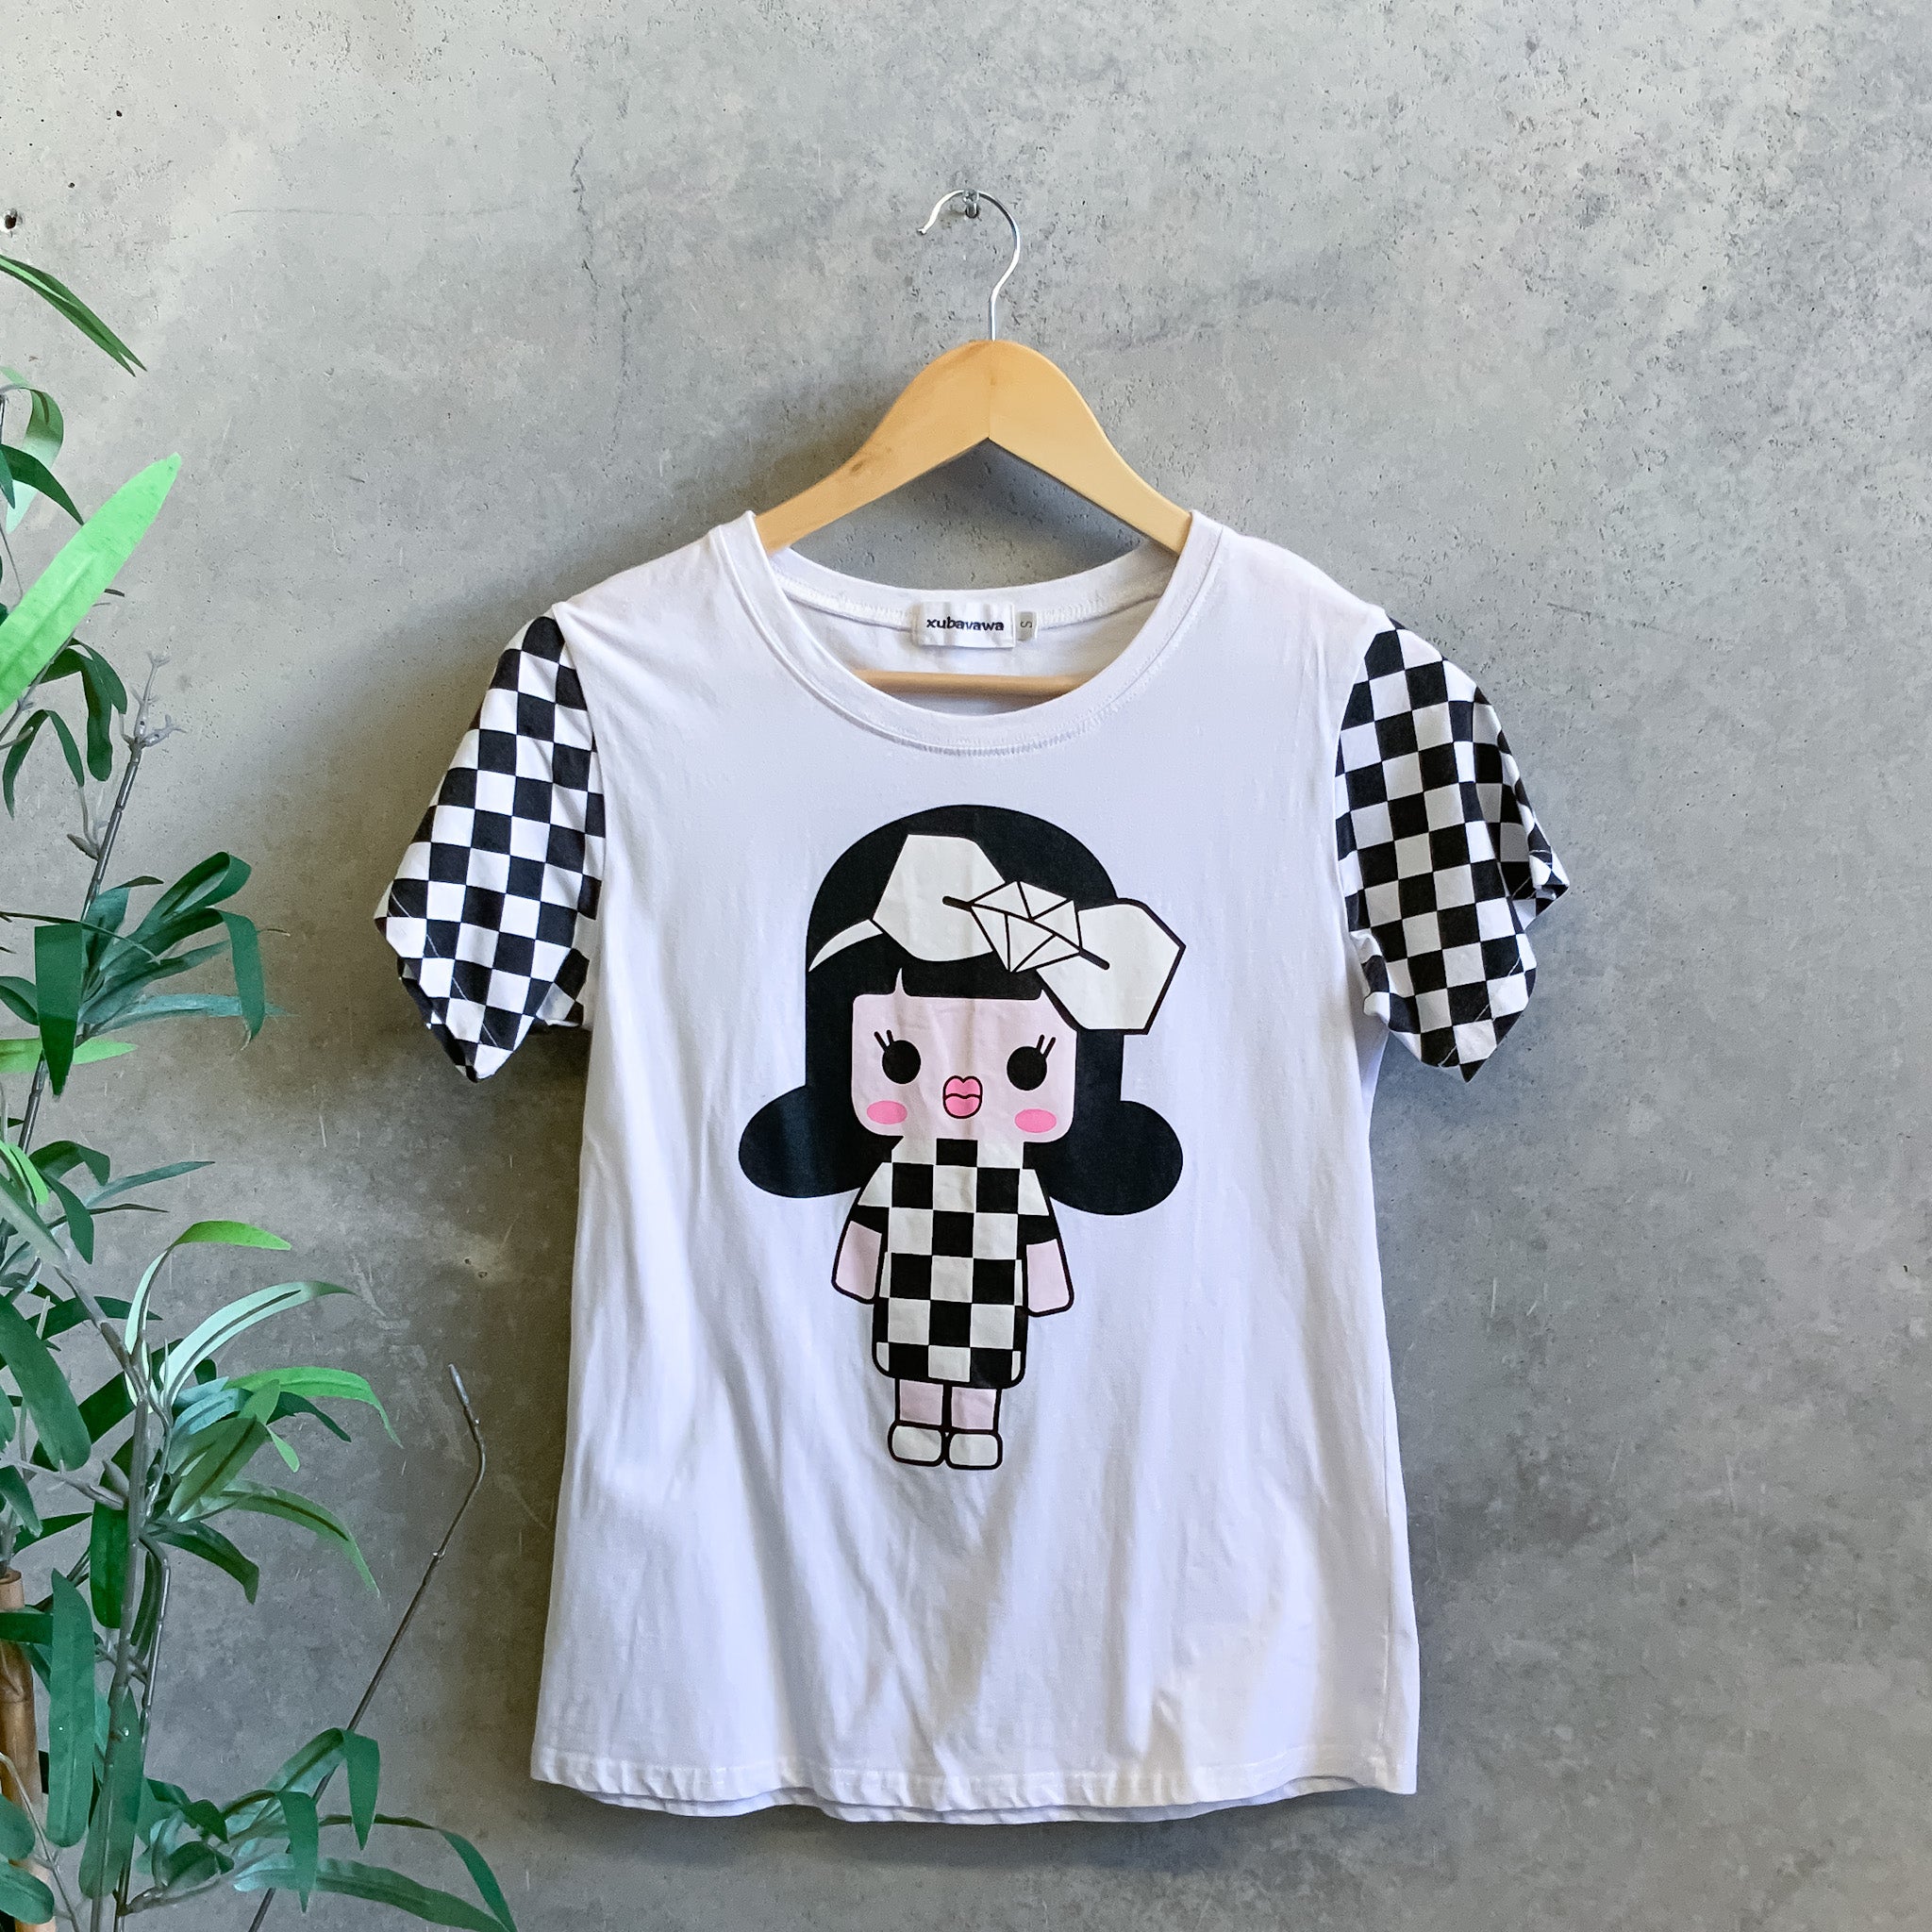 XUBAWAWA White Chic Little Girl Print Checkered Sleeves T Shirt - Size S